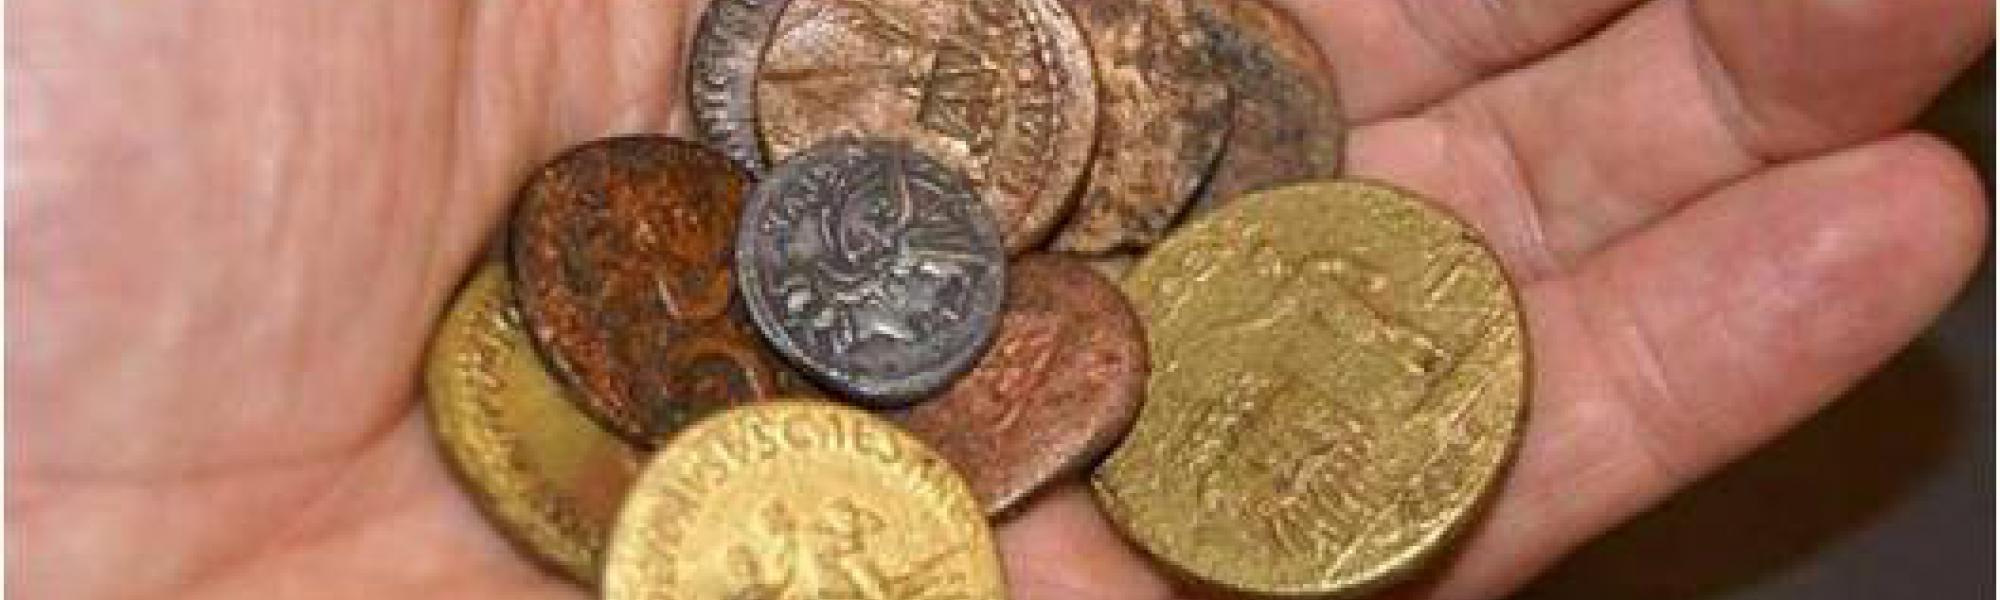 Handvol Romeinse munten